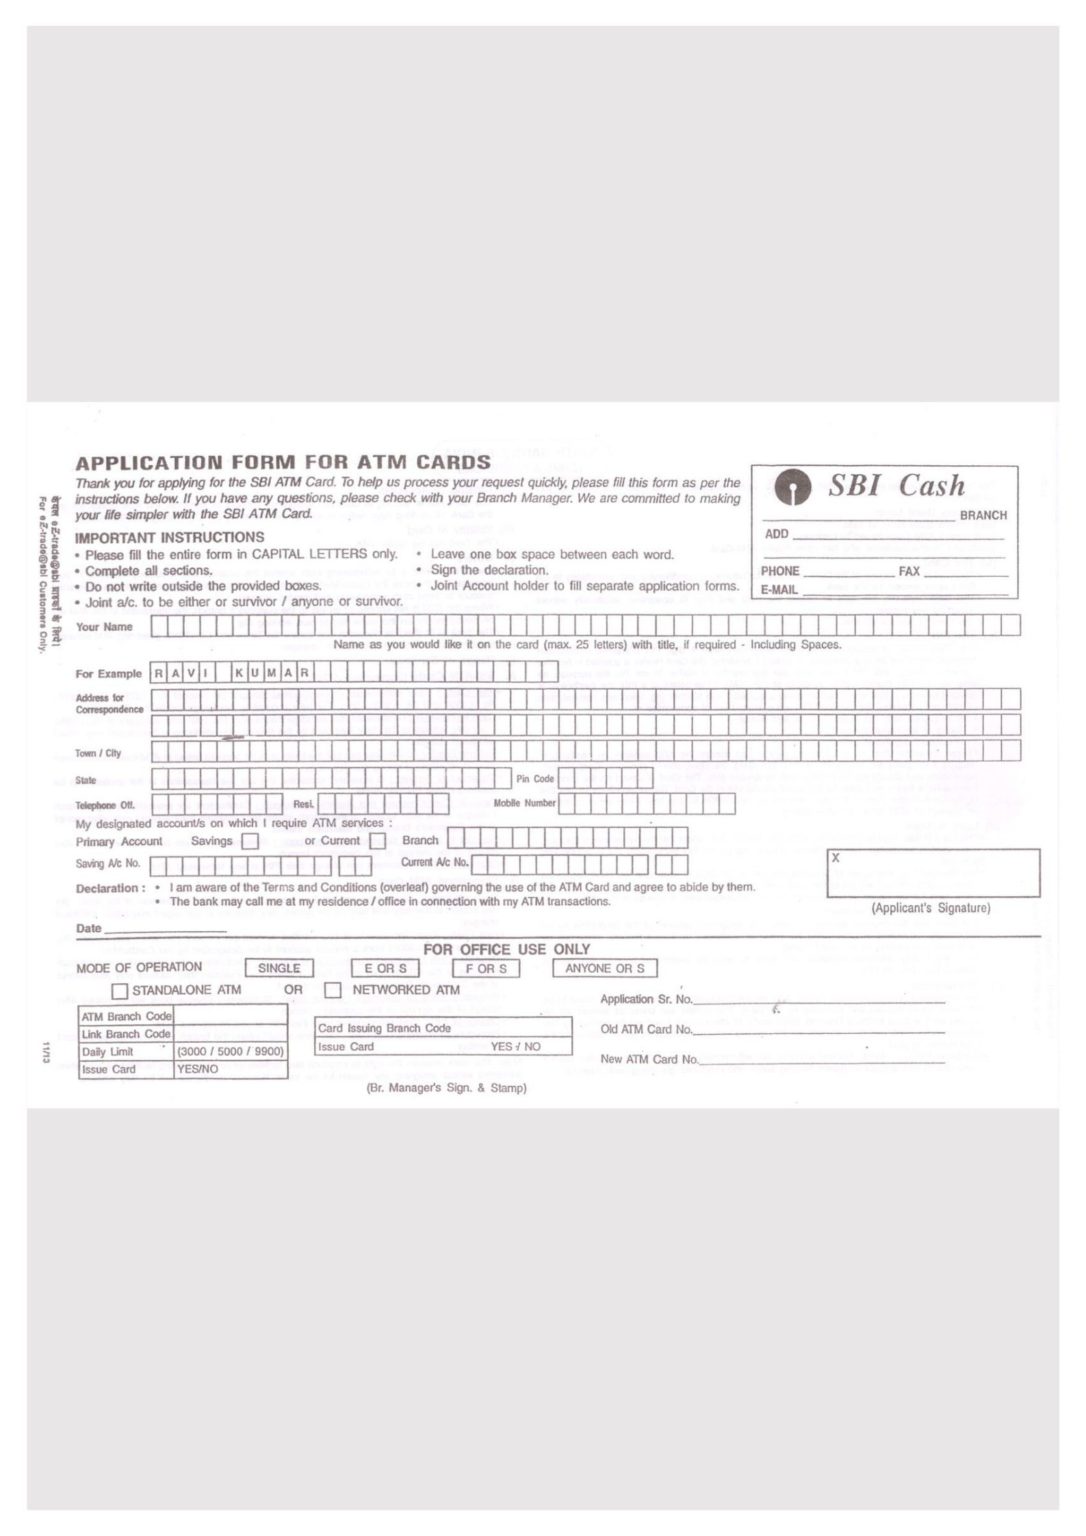 Sbi Atm Card Application Form Pdf Download Pin Generation 0030